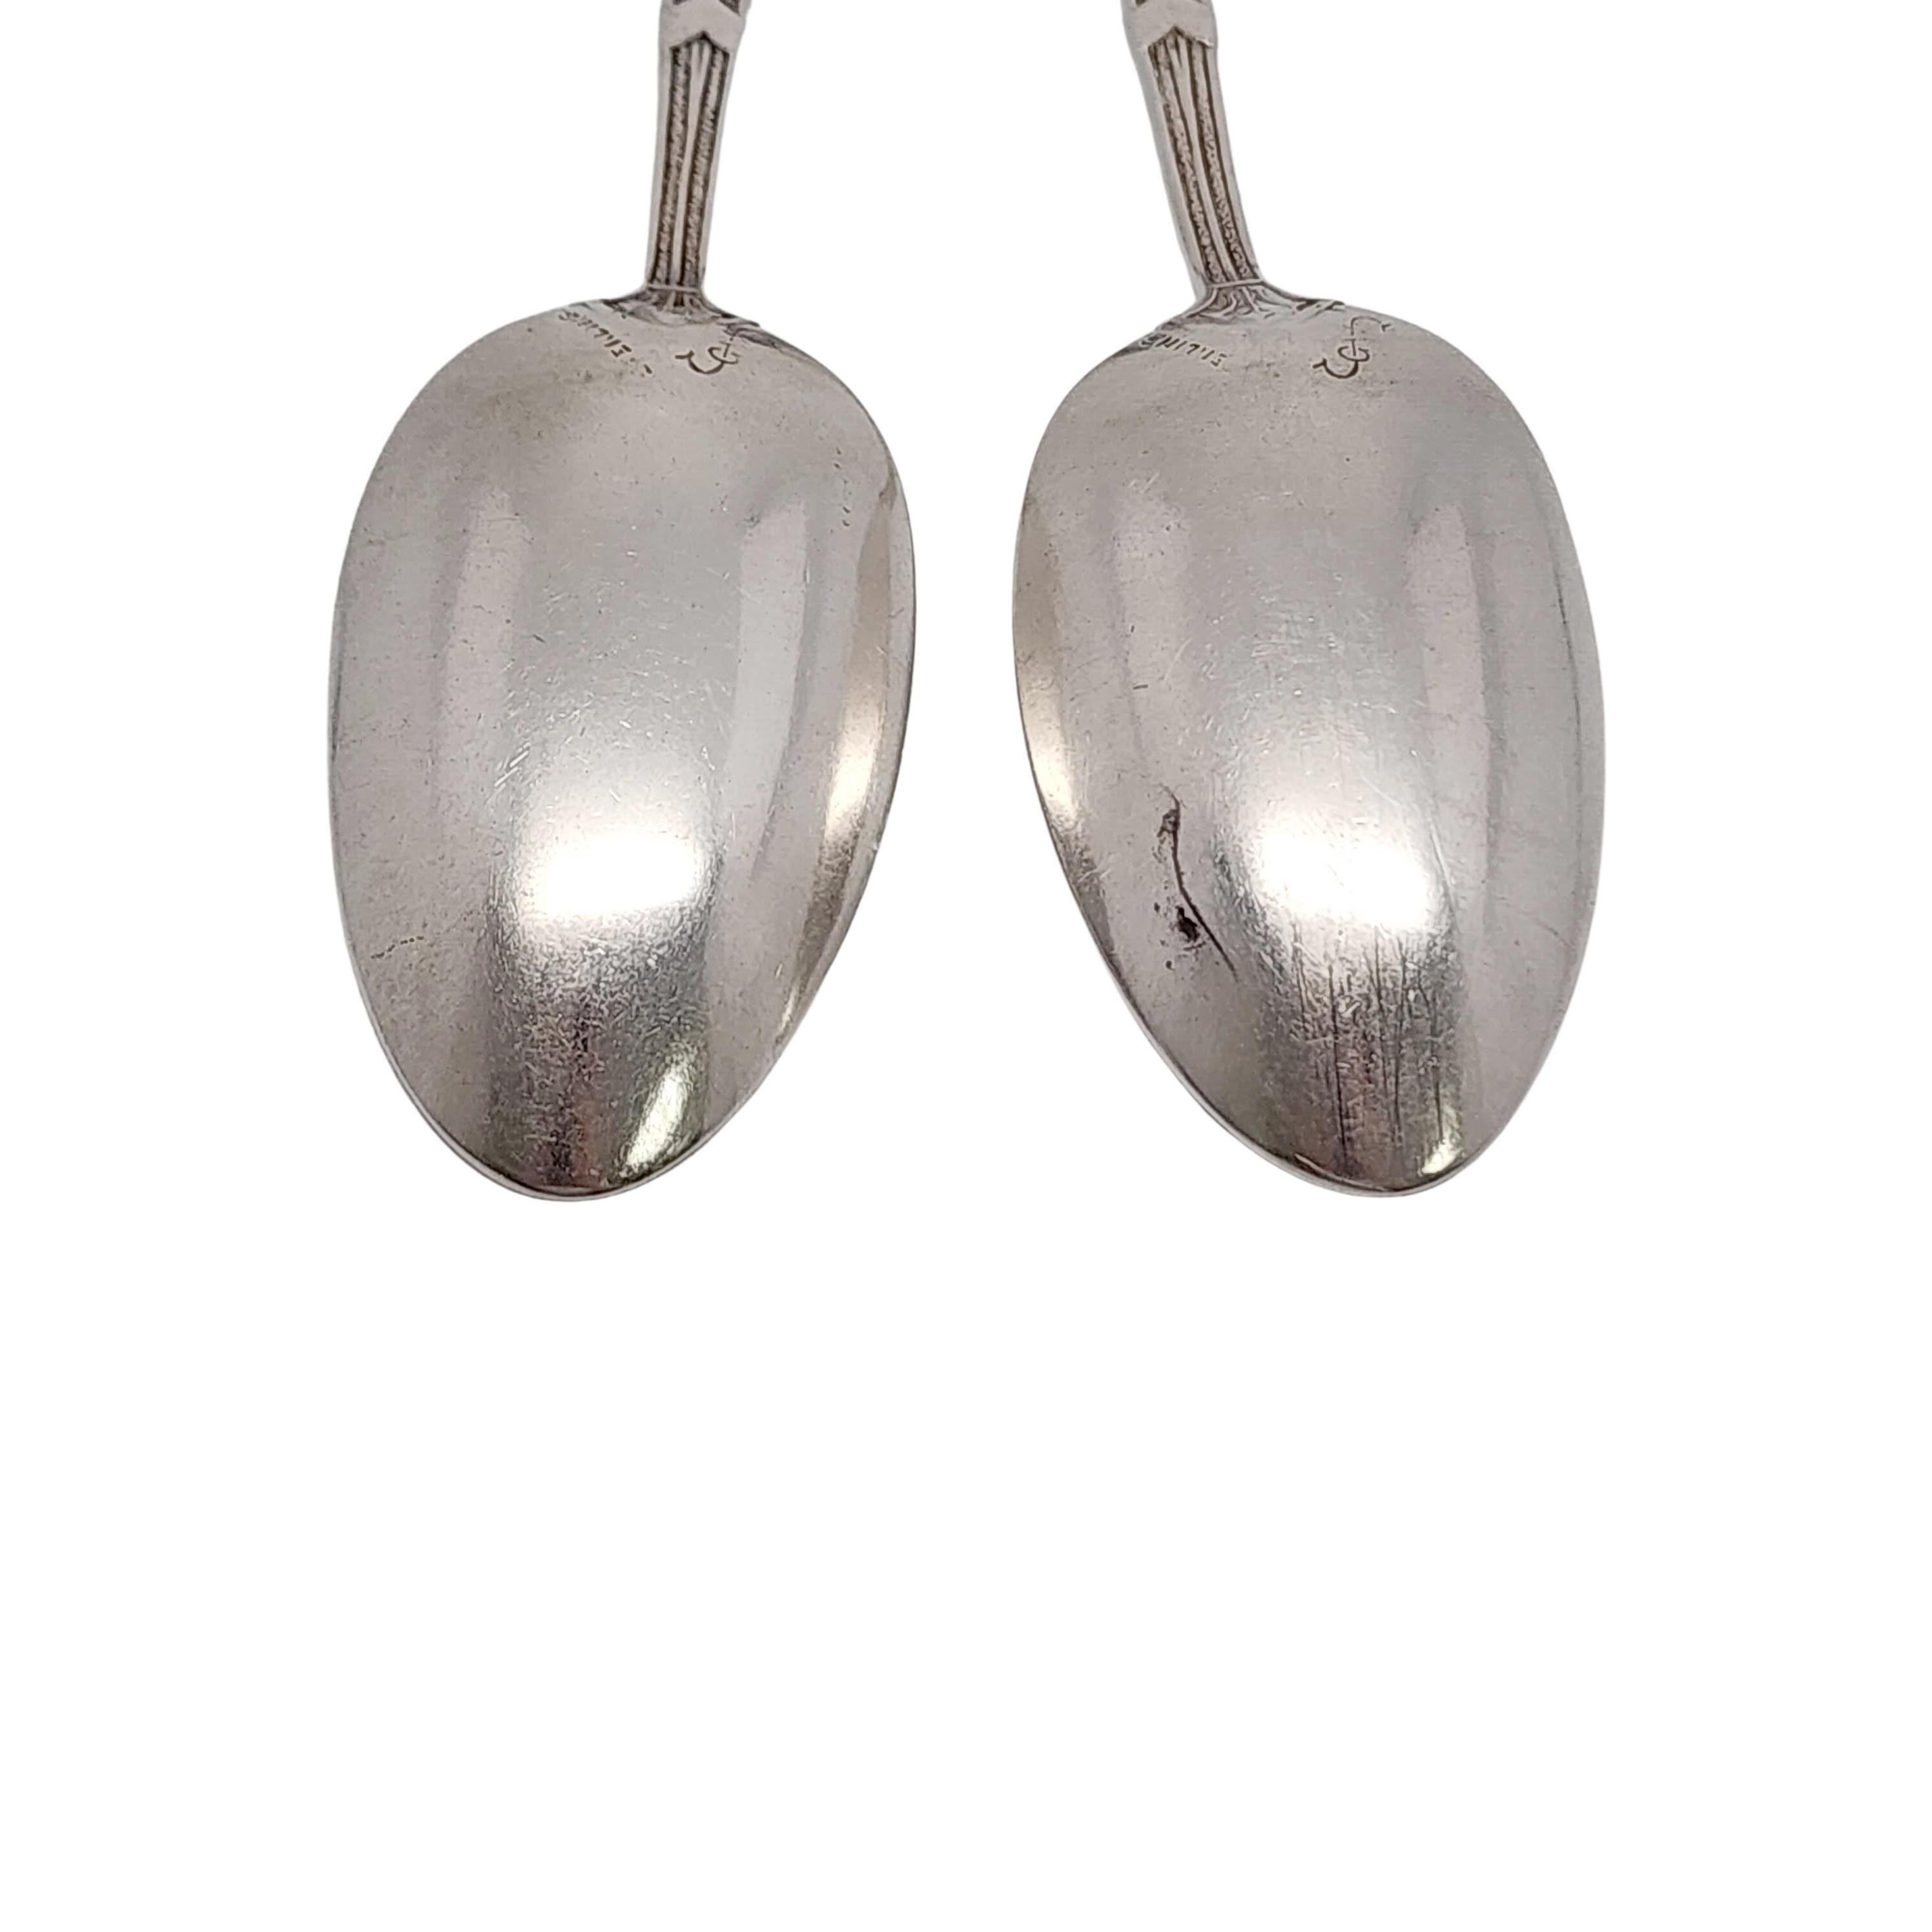 Set of 2 George Shiebler Sterling Silver Amaryllis Teaspoons w/Engraving #15843 For Sale 1